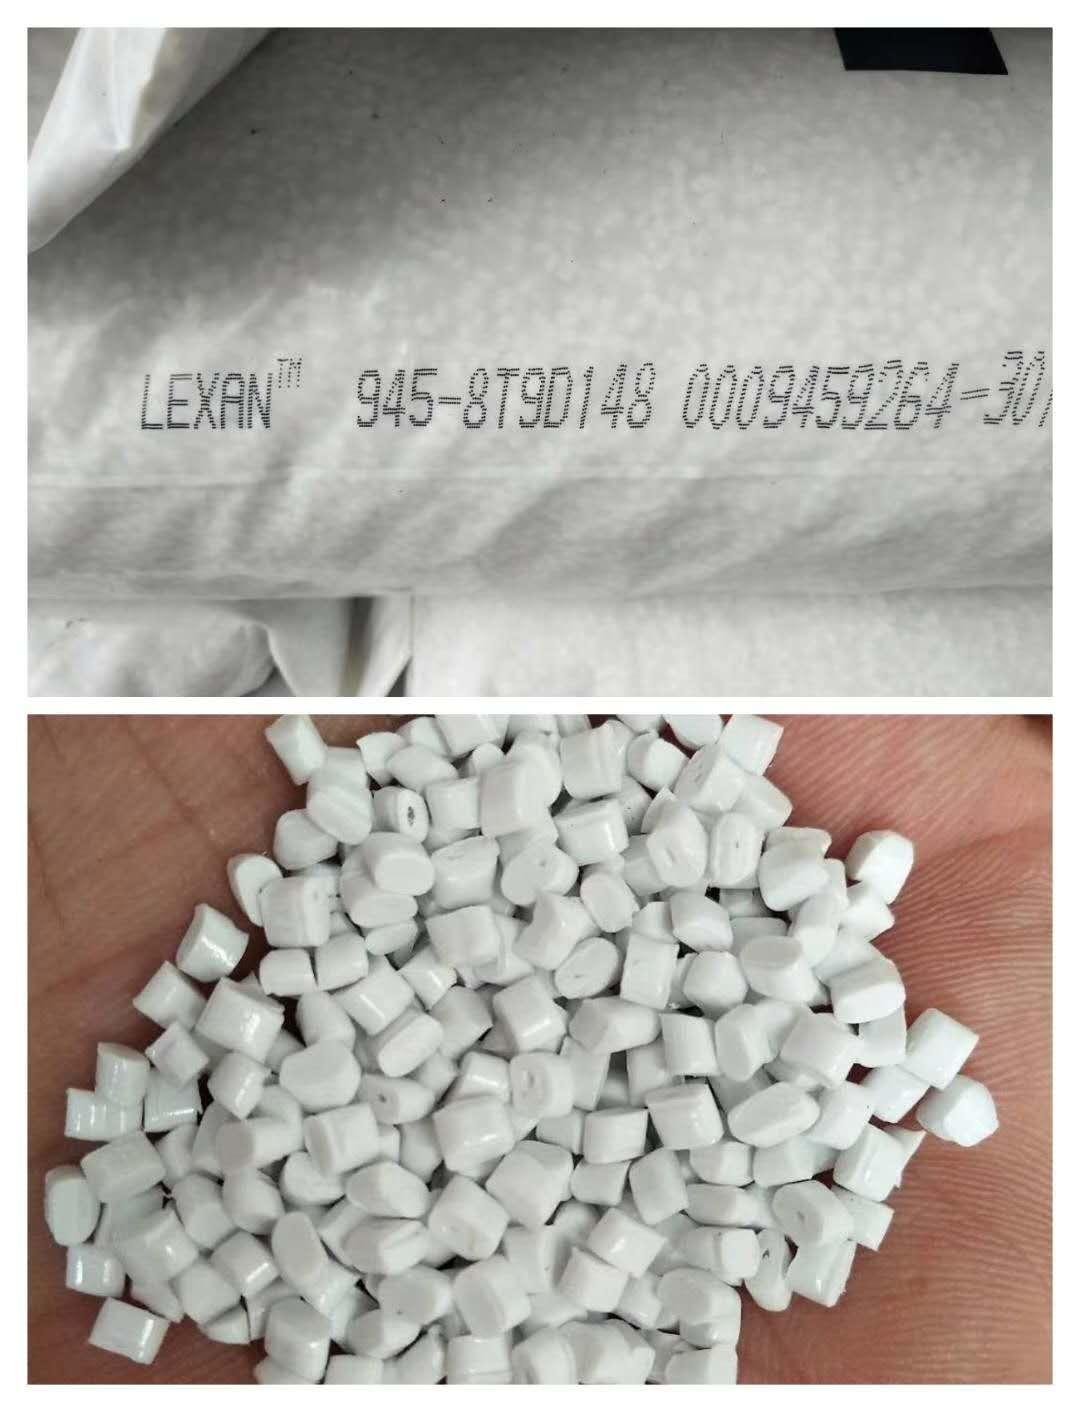 LEXAN 945-8T9D148 WHITE